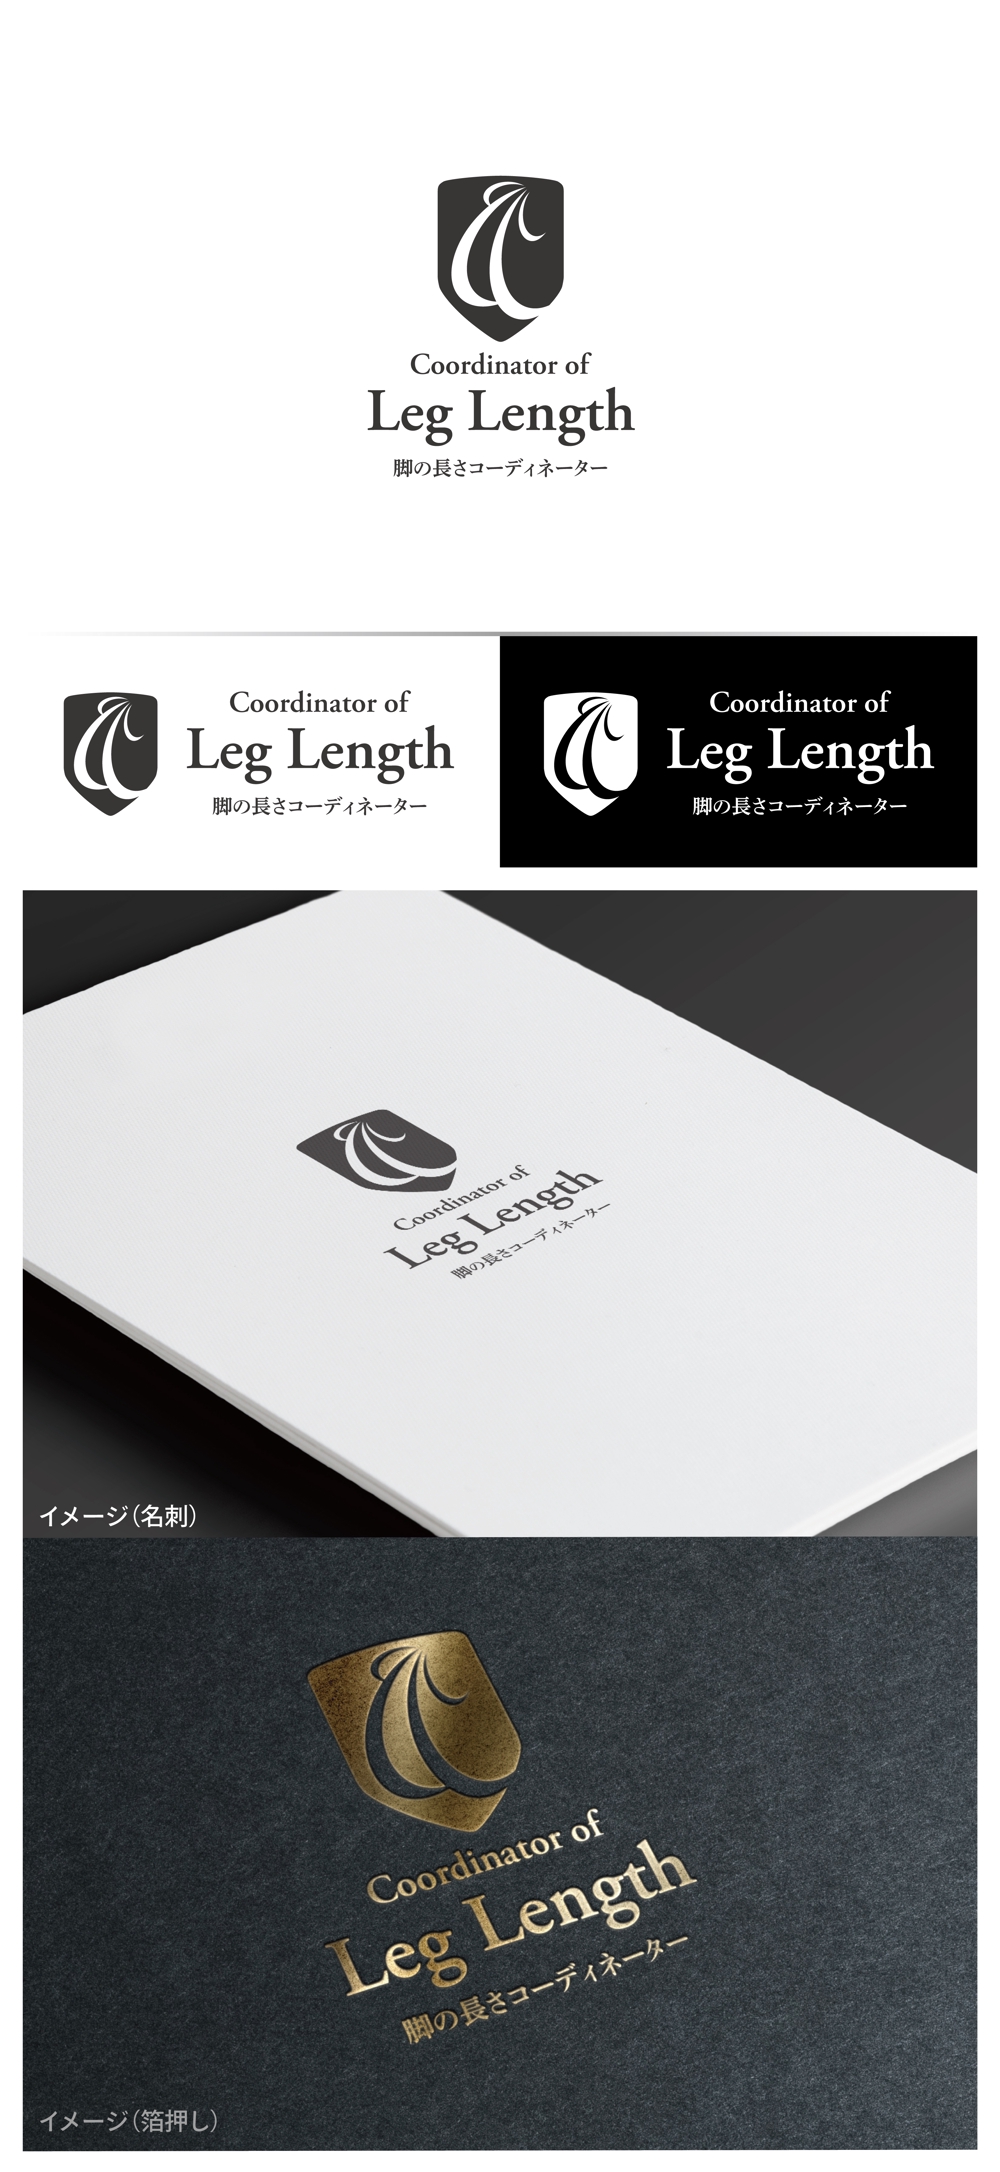 Coordinator of Leg Length_logo03_01.jpg